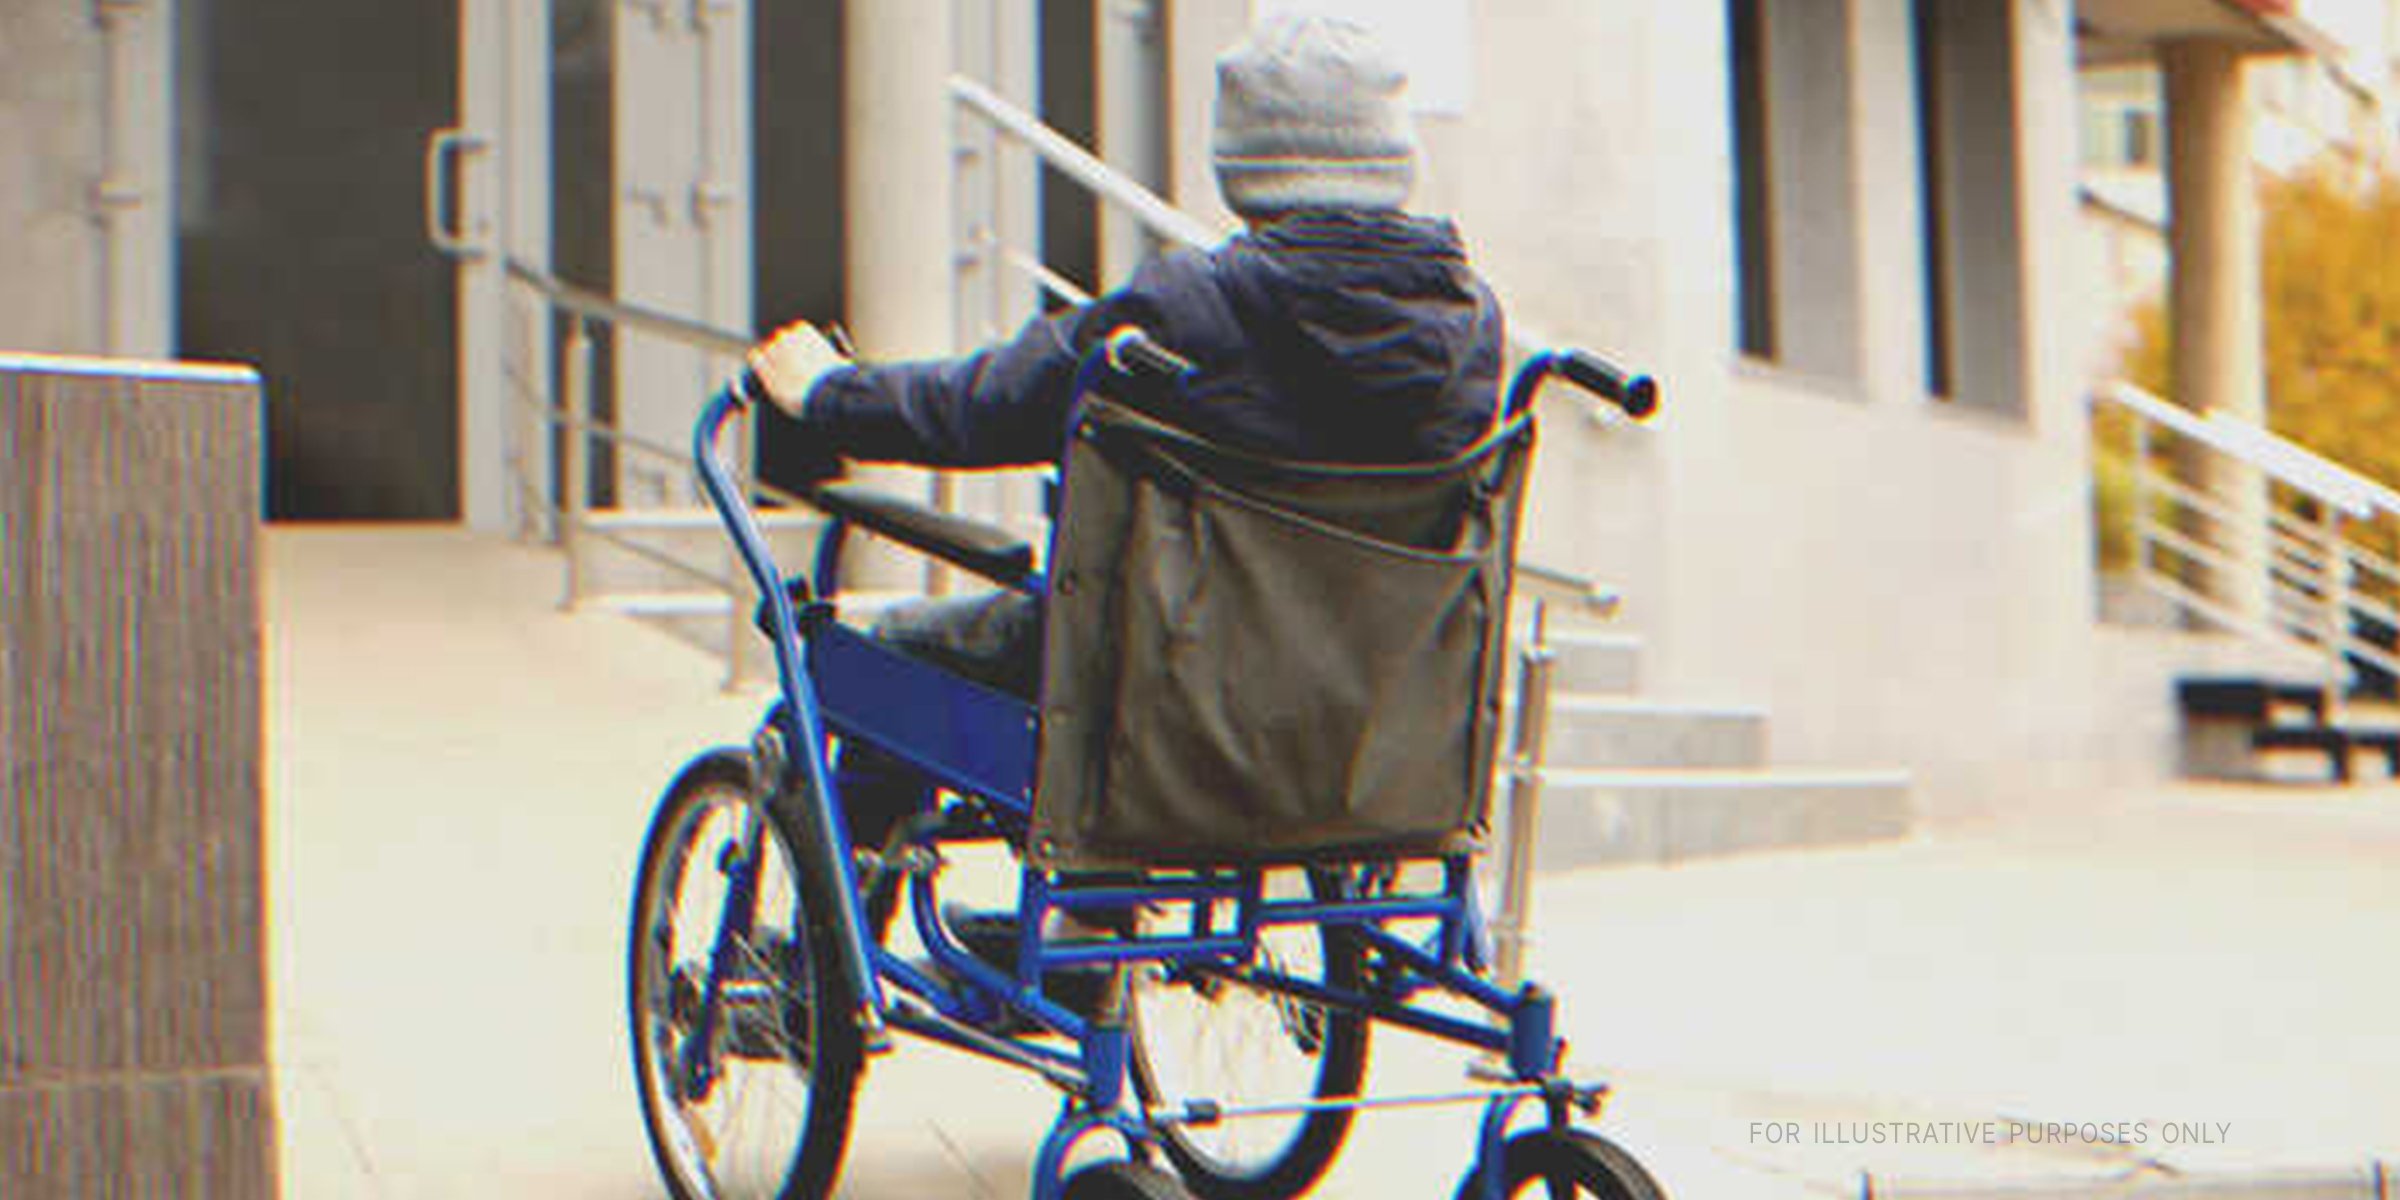 Boy in wheelchair outside a building | Source: Shutterstock